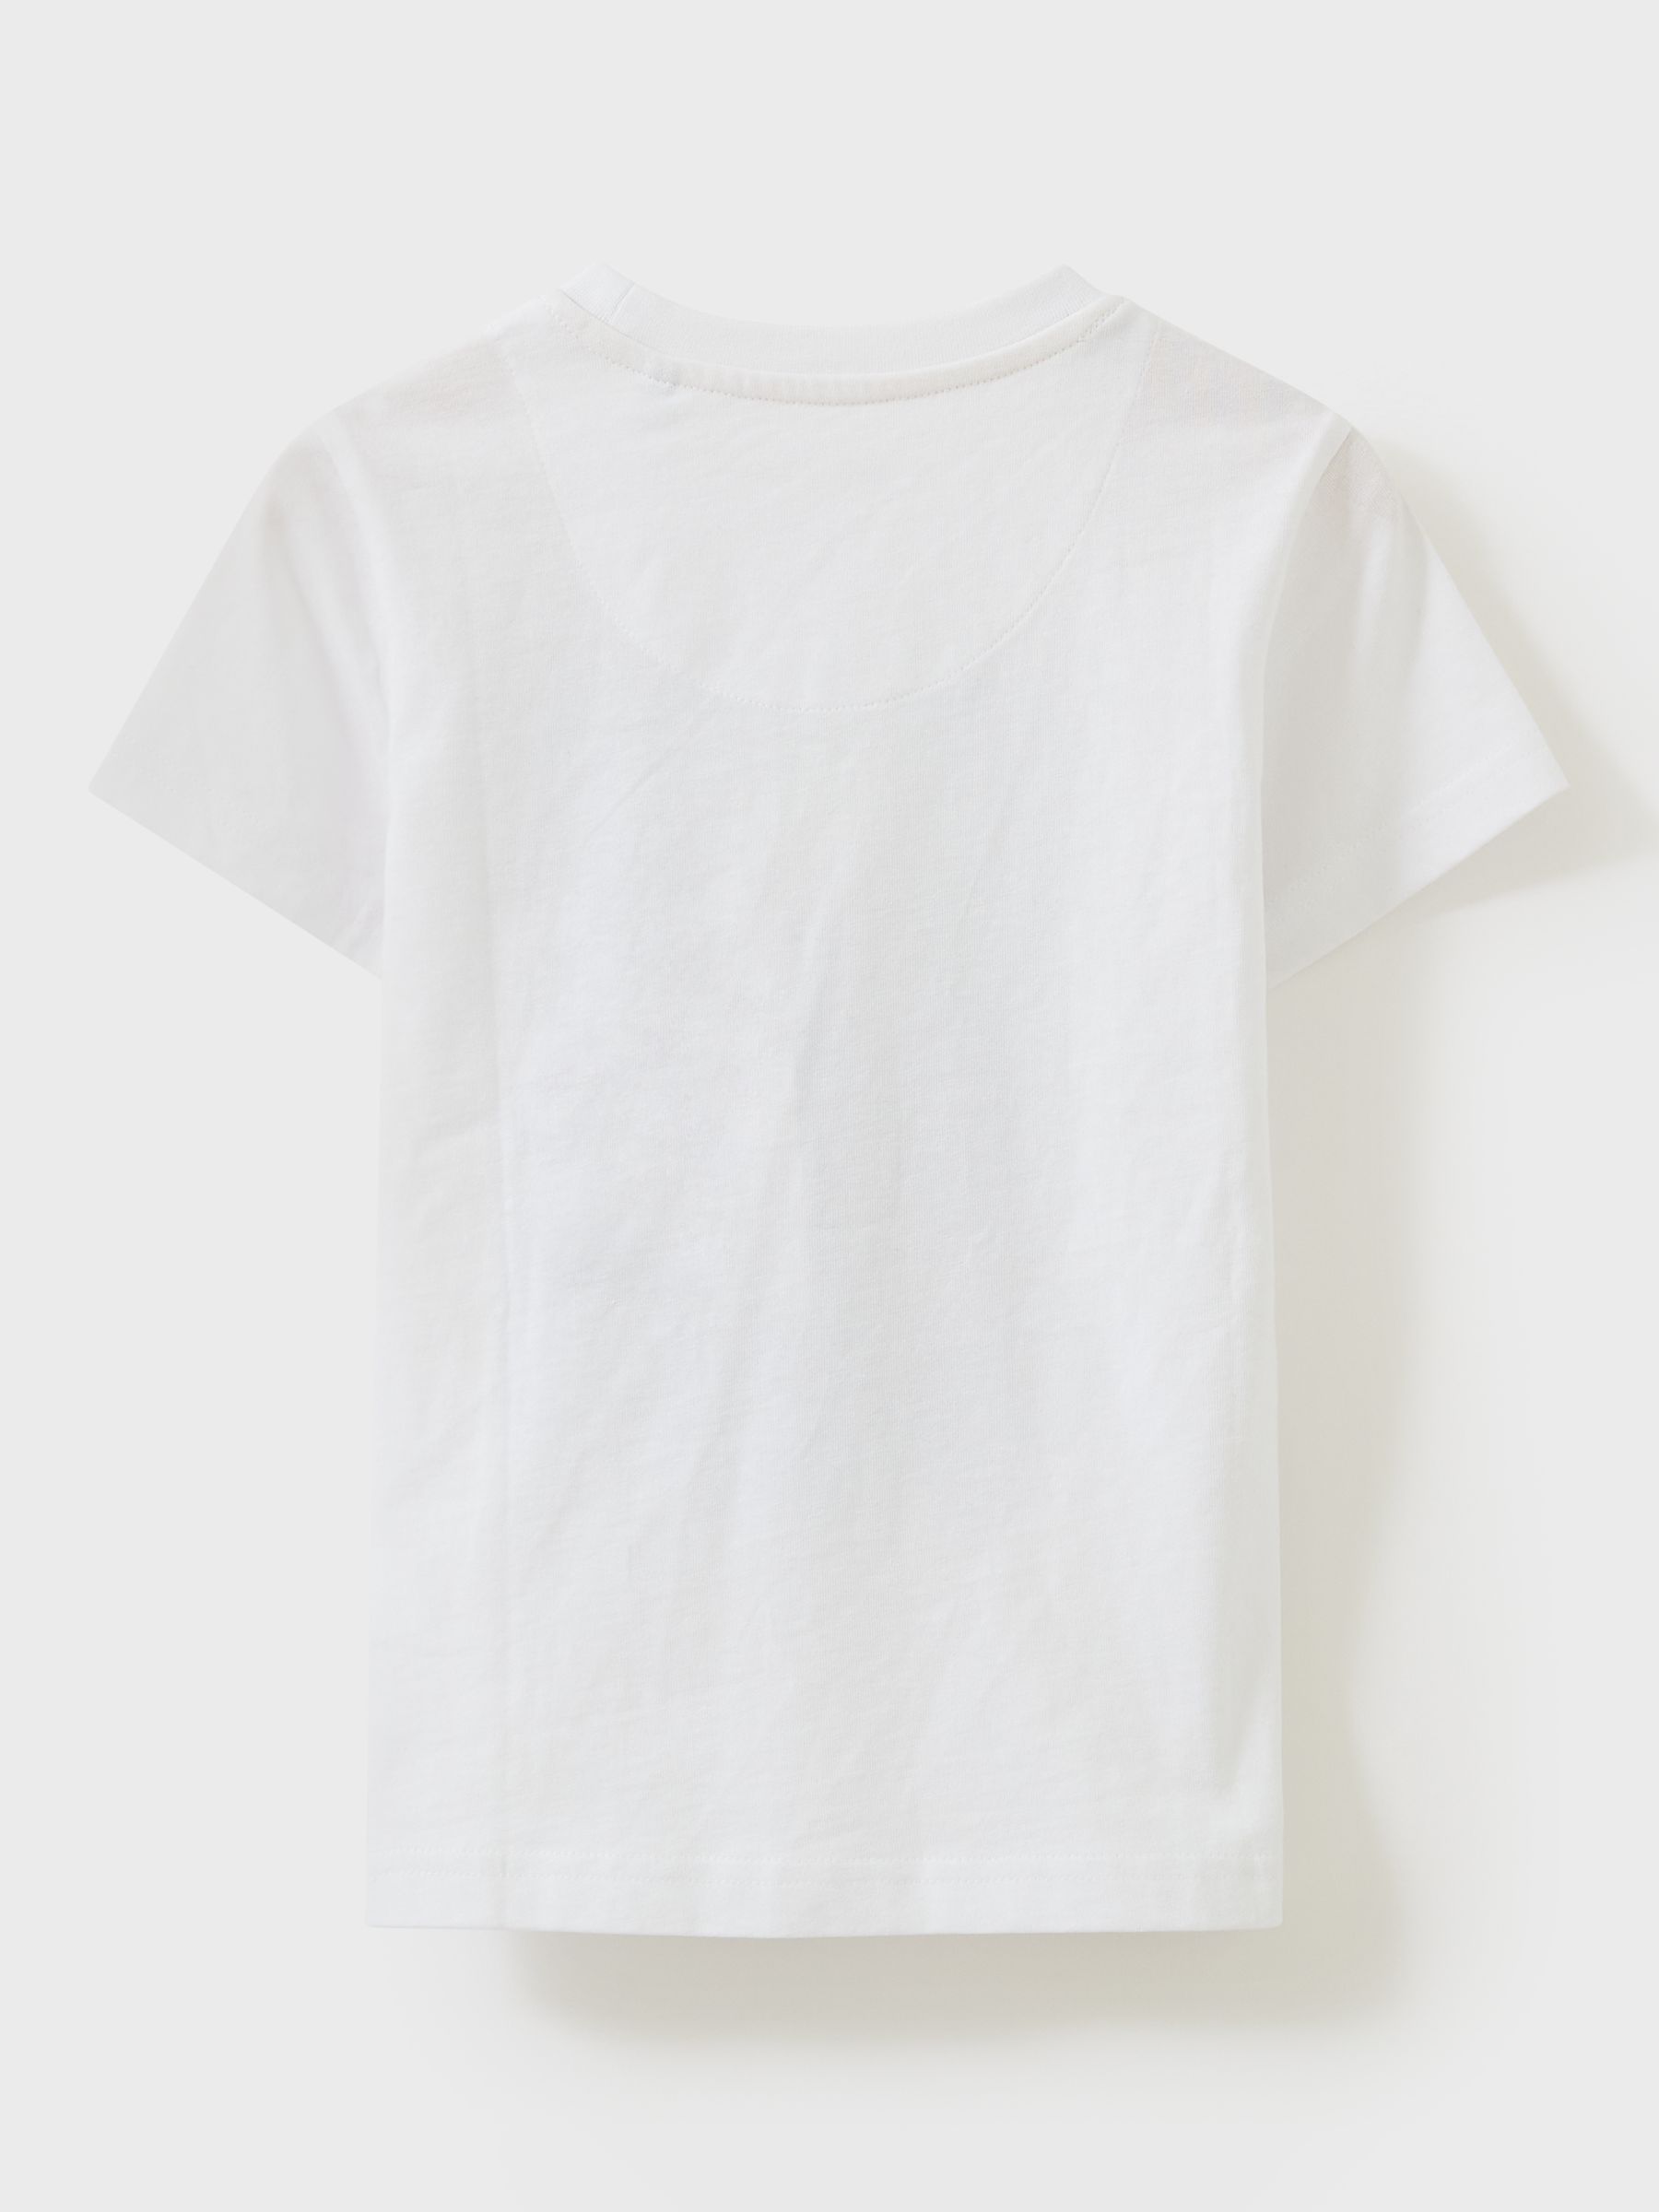 Crew Clothing Kids' Sea View Print T-Shirt, White/Aqua Blue, 3-4 years